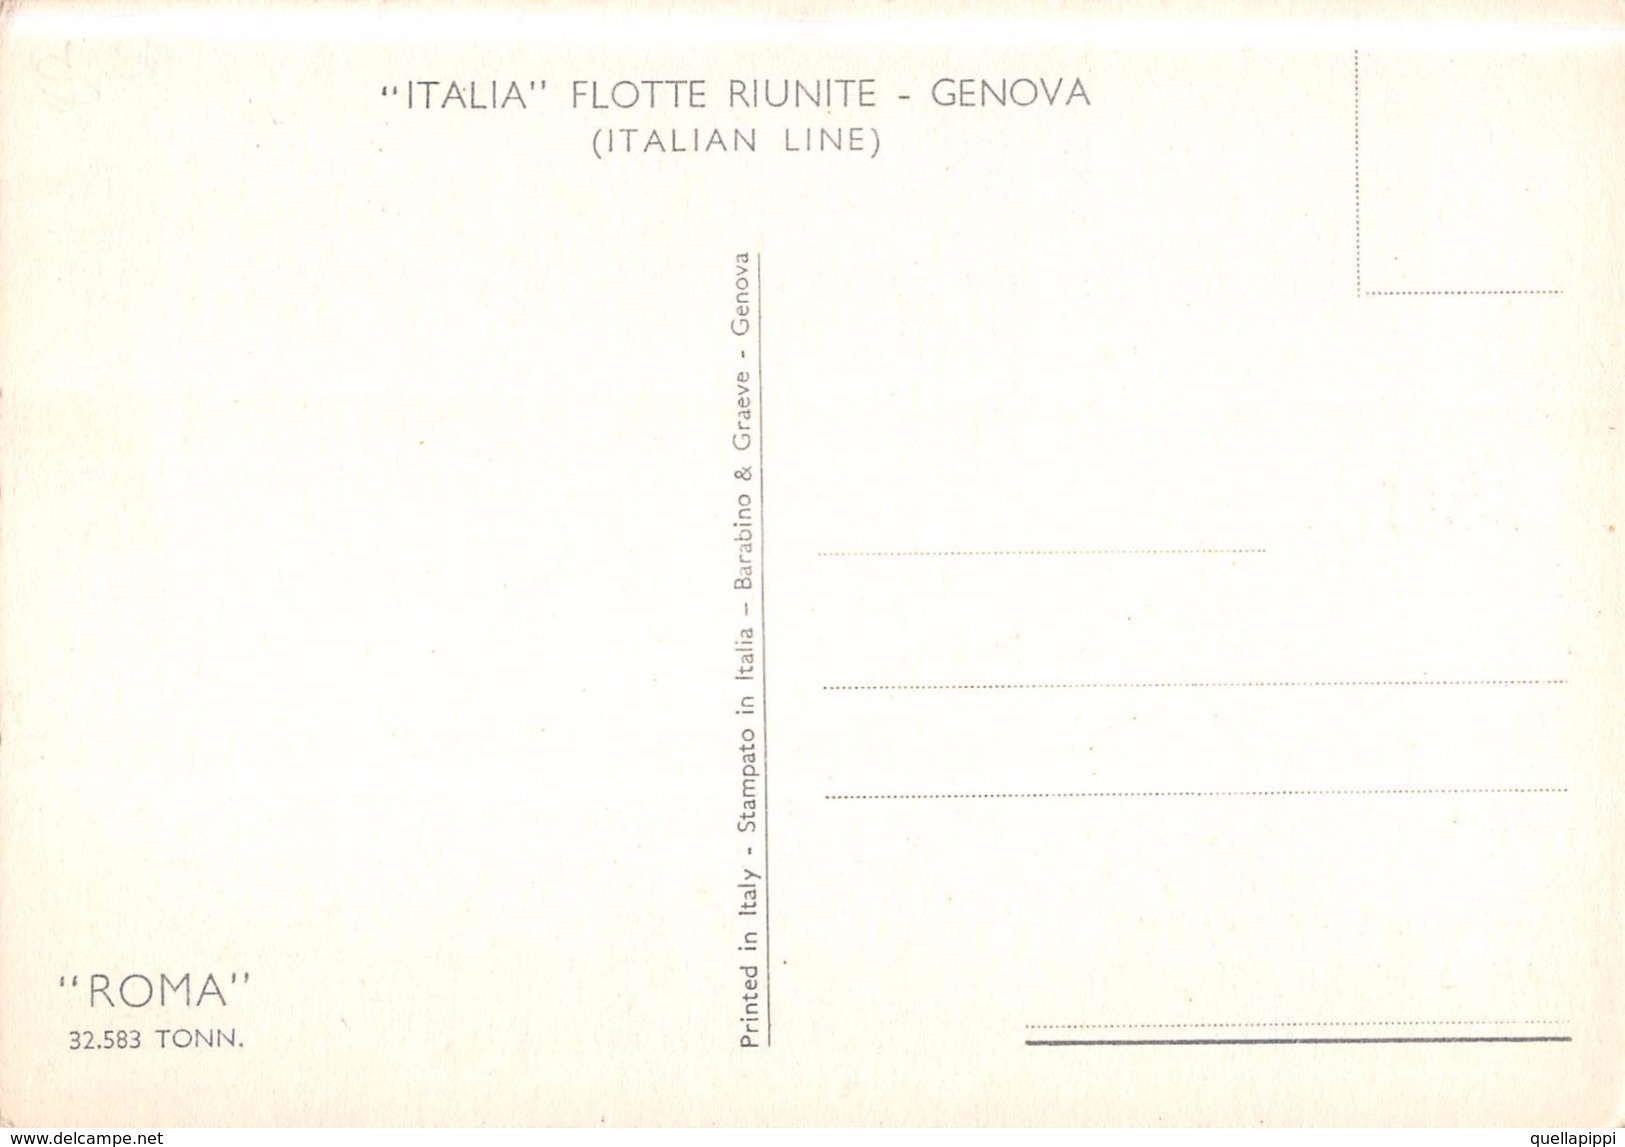 05423 "MOTONAVE ROMA - 32583 TONN - ITALIA FLOTTE RIUNITE - GENOVA"  CART NON SPED - Banche